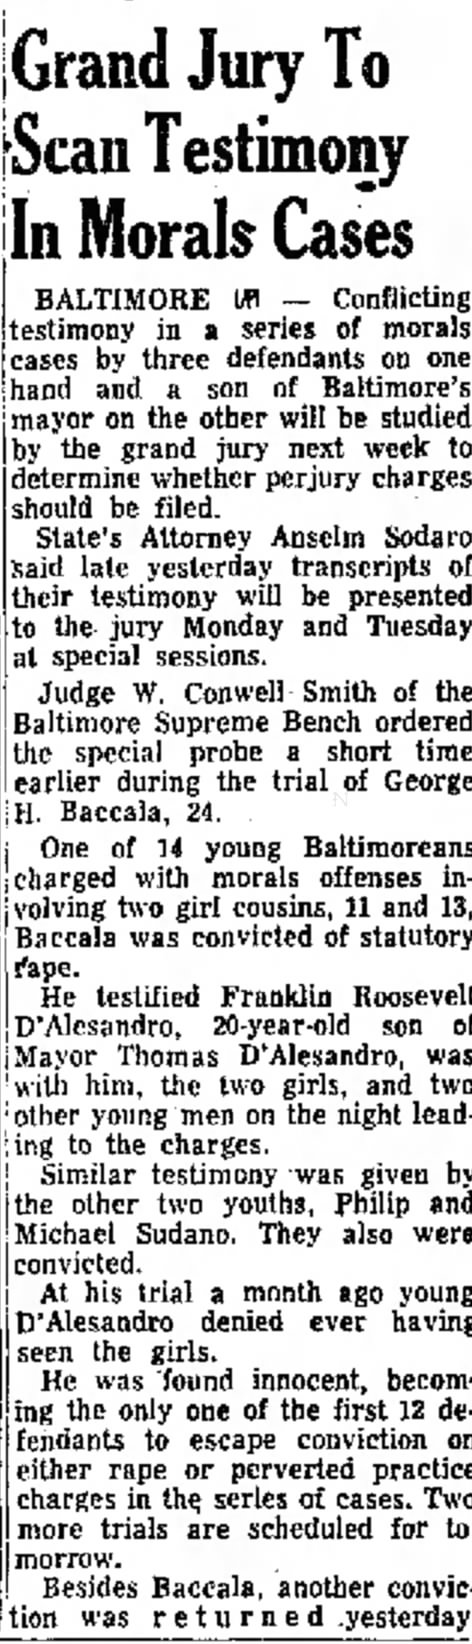 Grand jury investigation into 1953 Baltimore rape acquittal of Franklin D. Roosevelt D'Allesandro